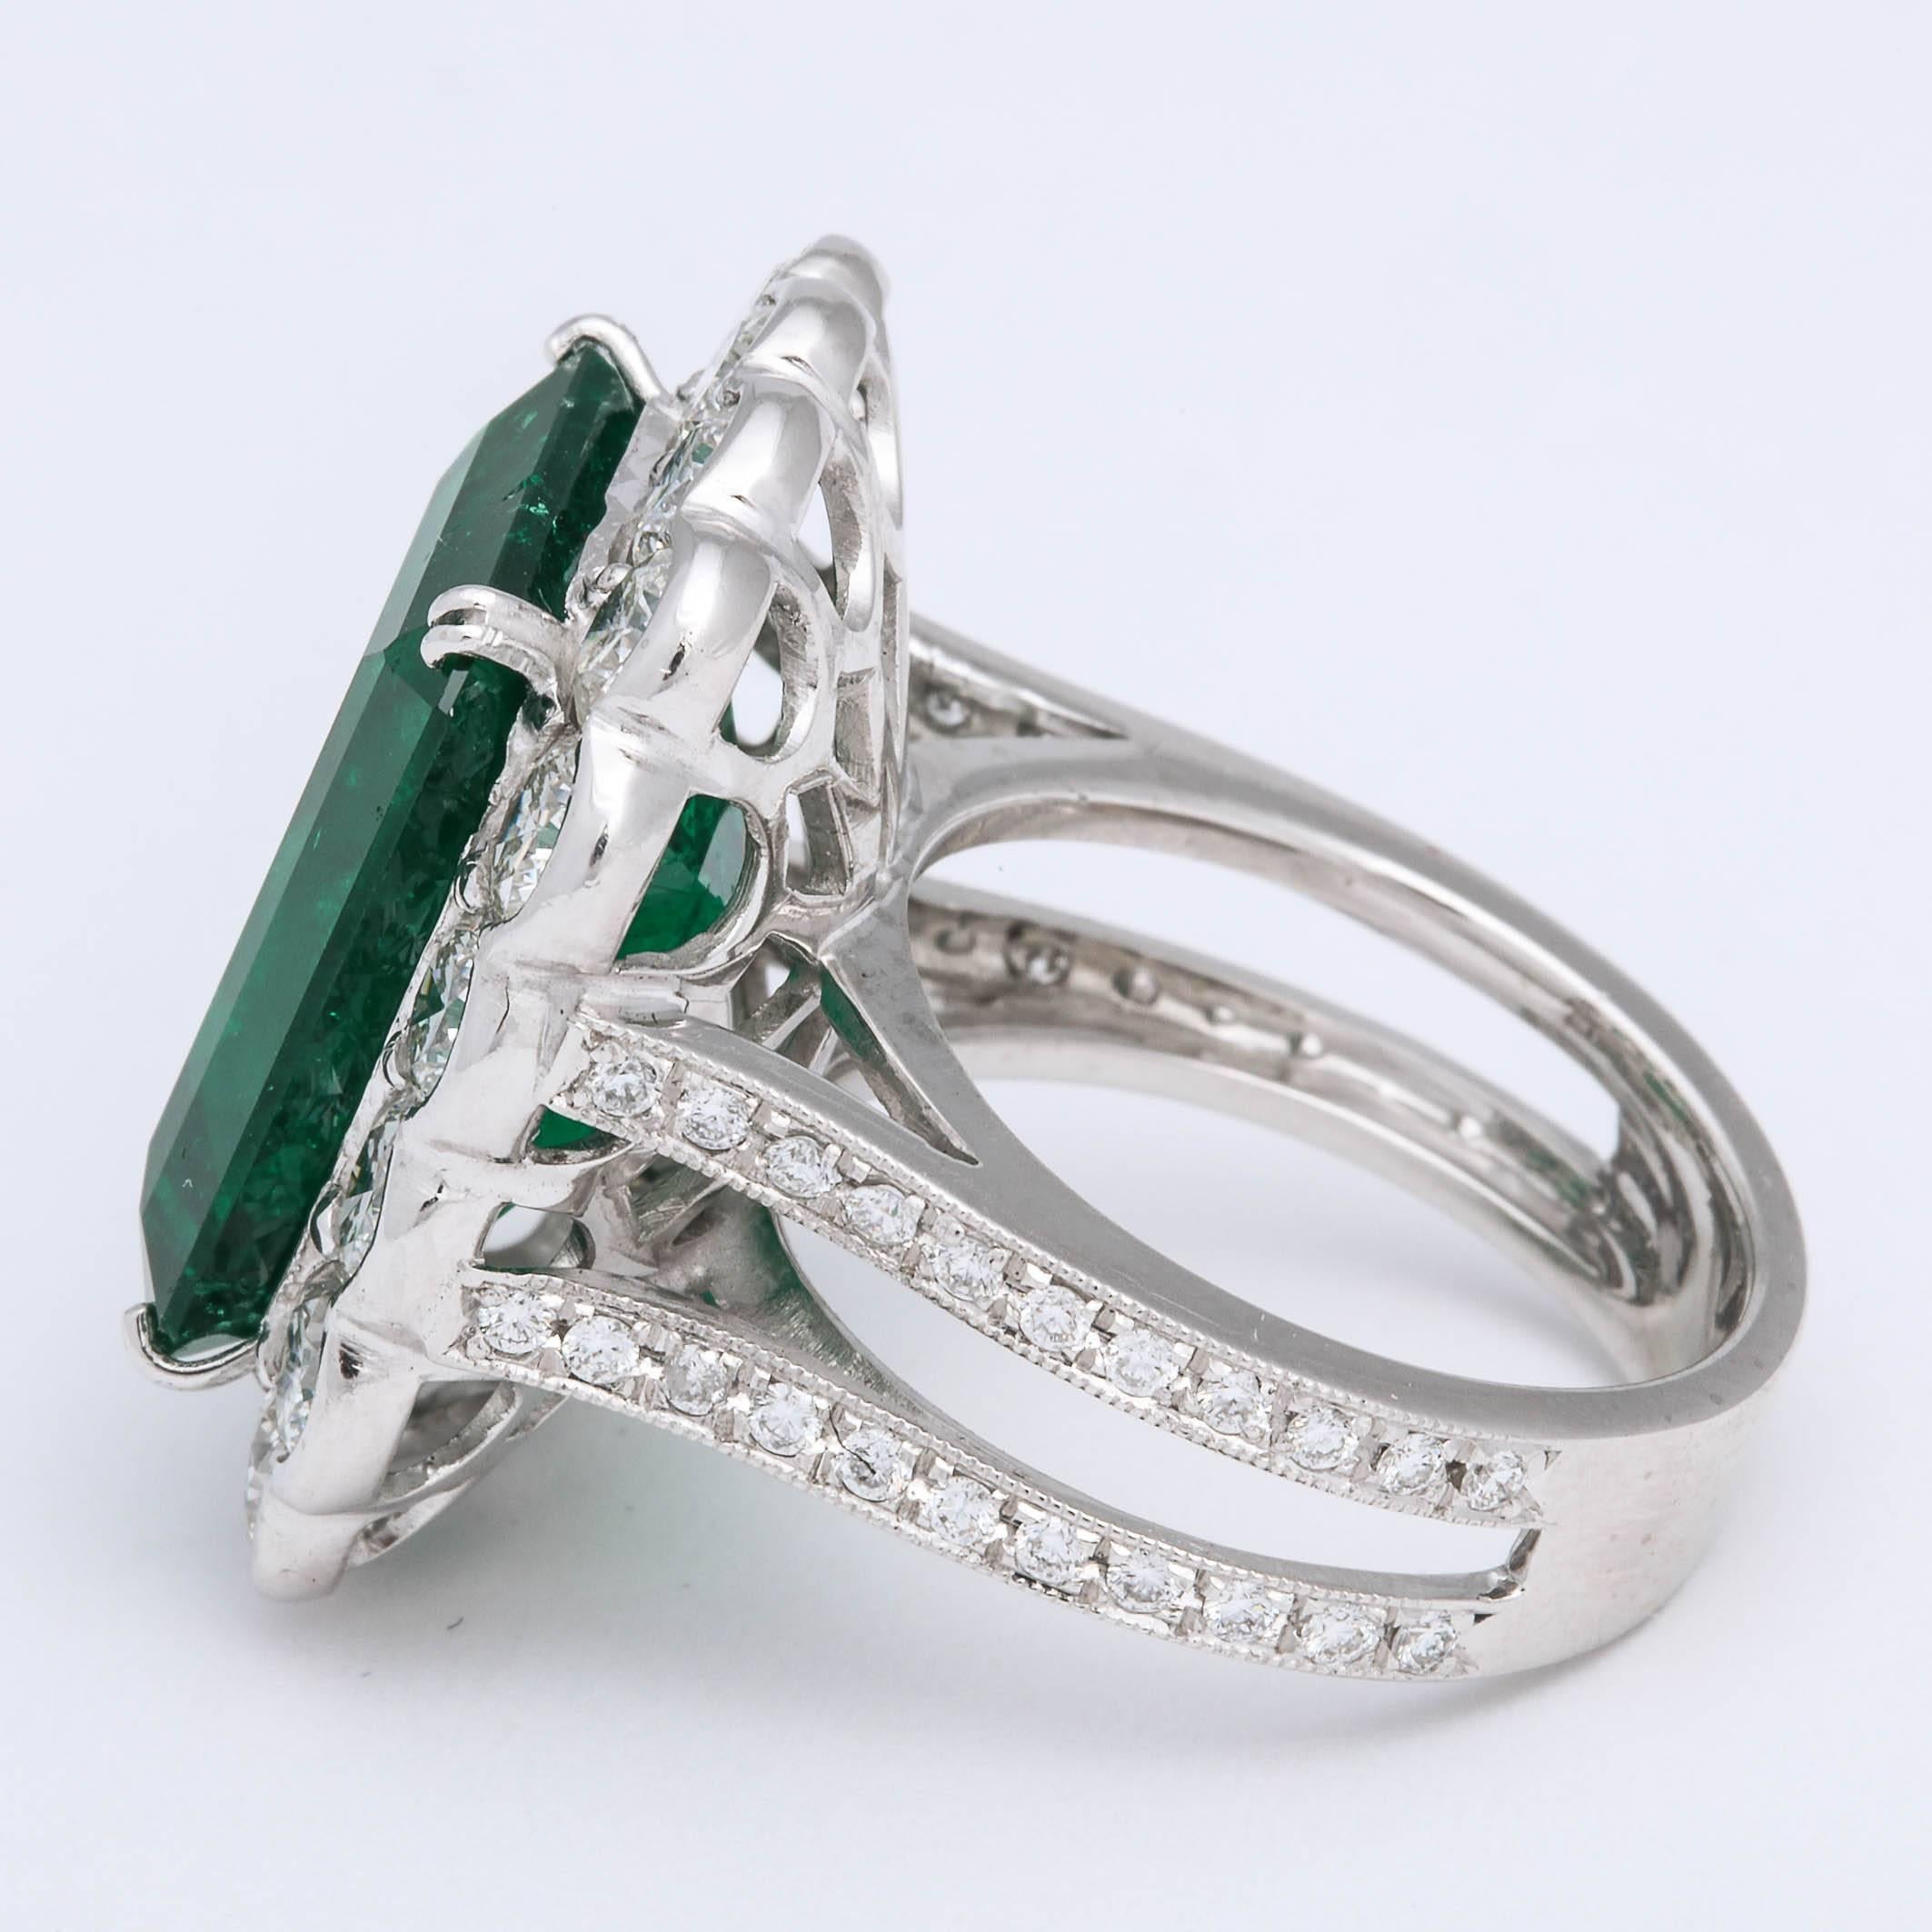 13 carat emerald ring